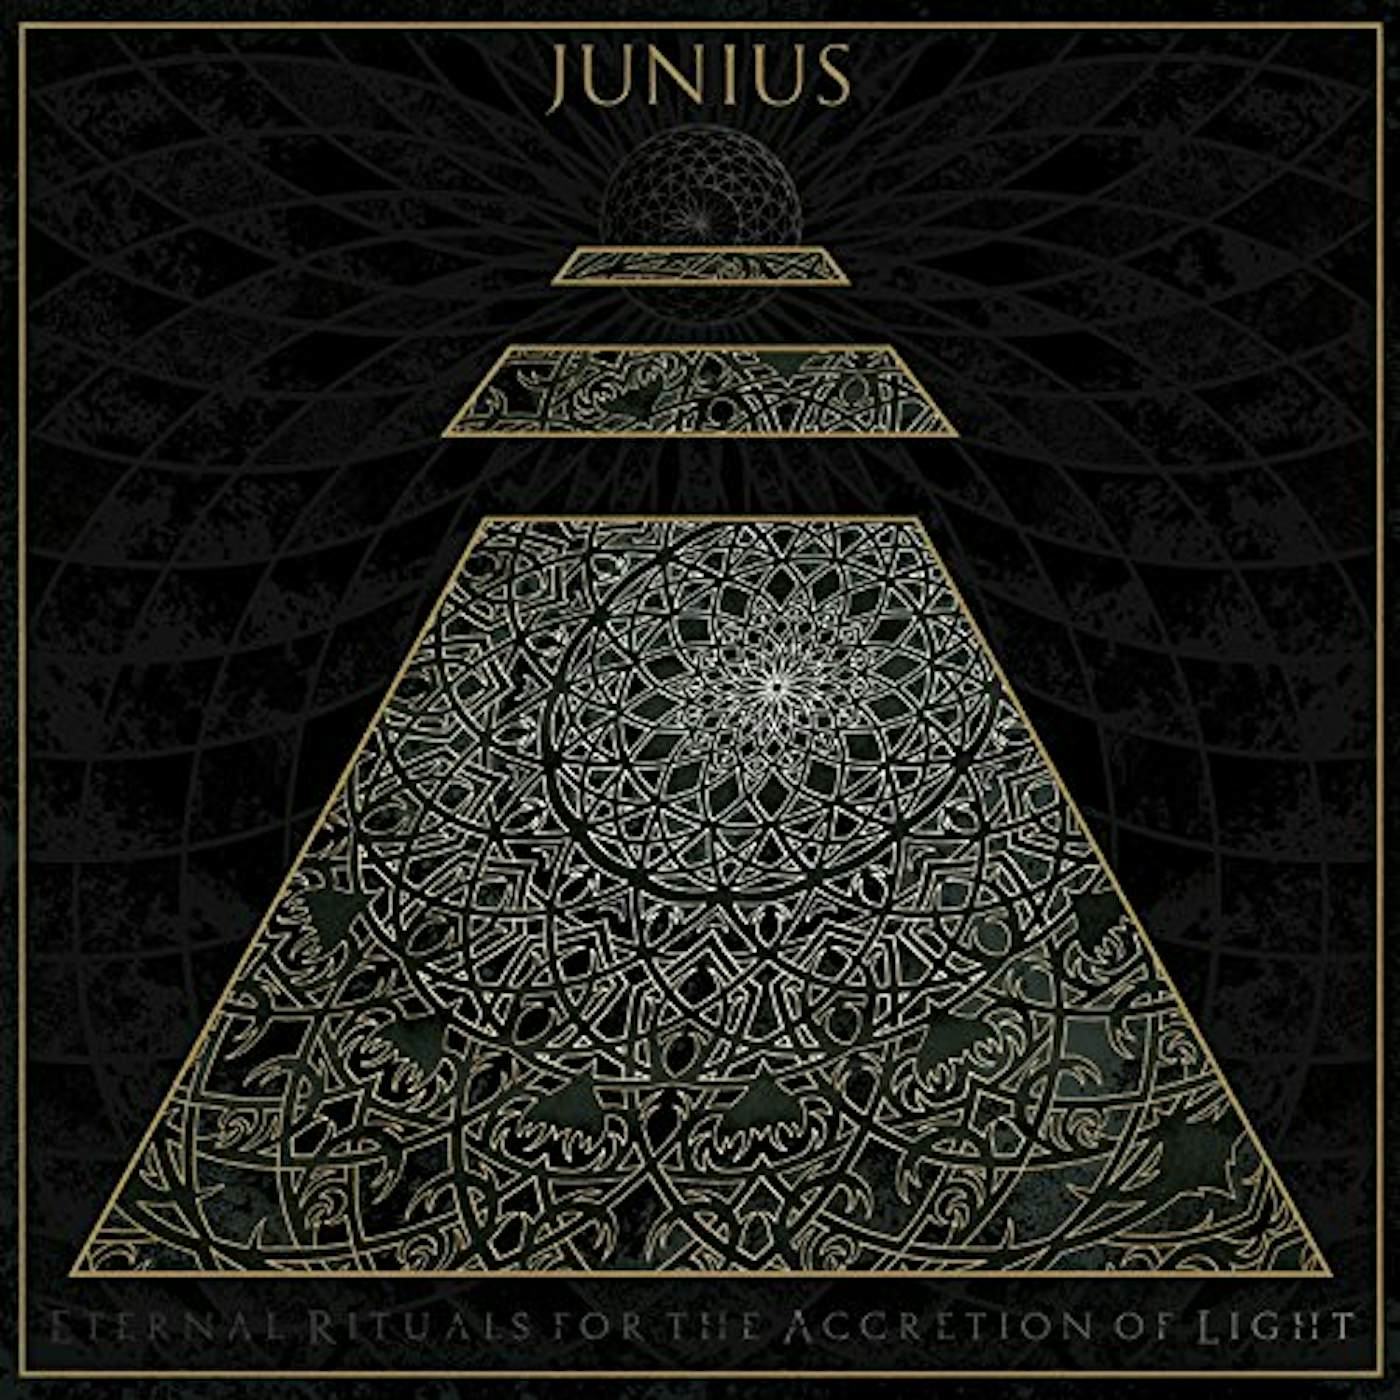 Junius ETERNAL RITUALS FOR THE ACCRETION OF LIGHT CD